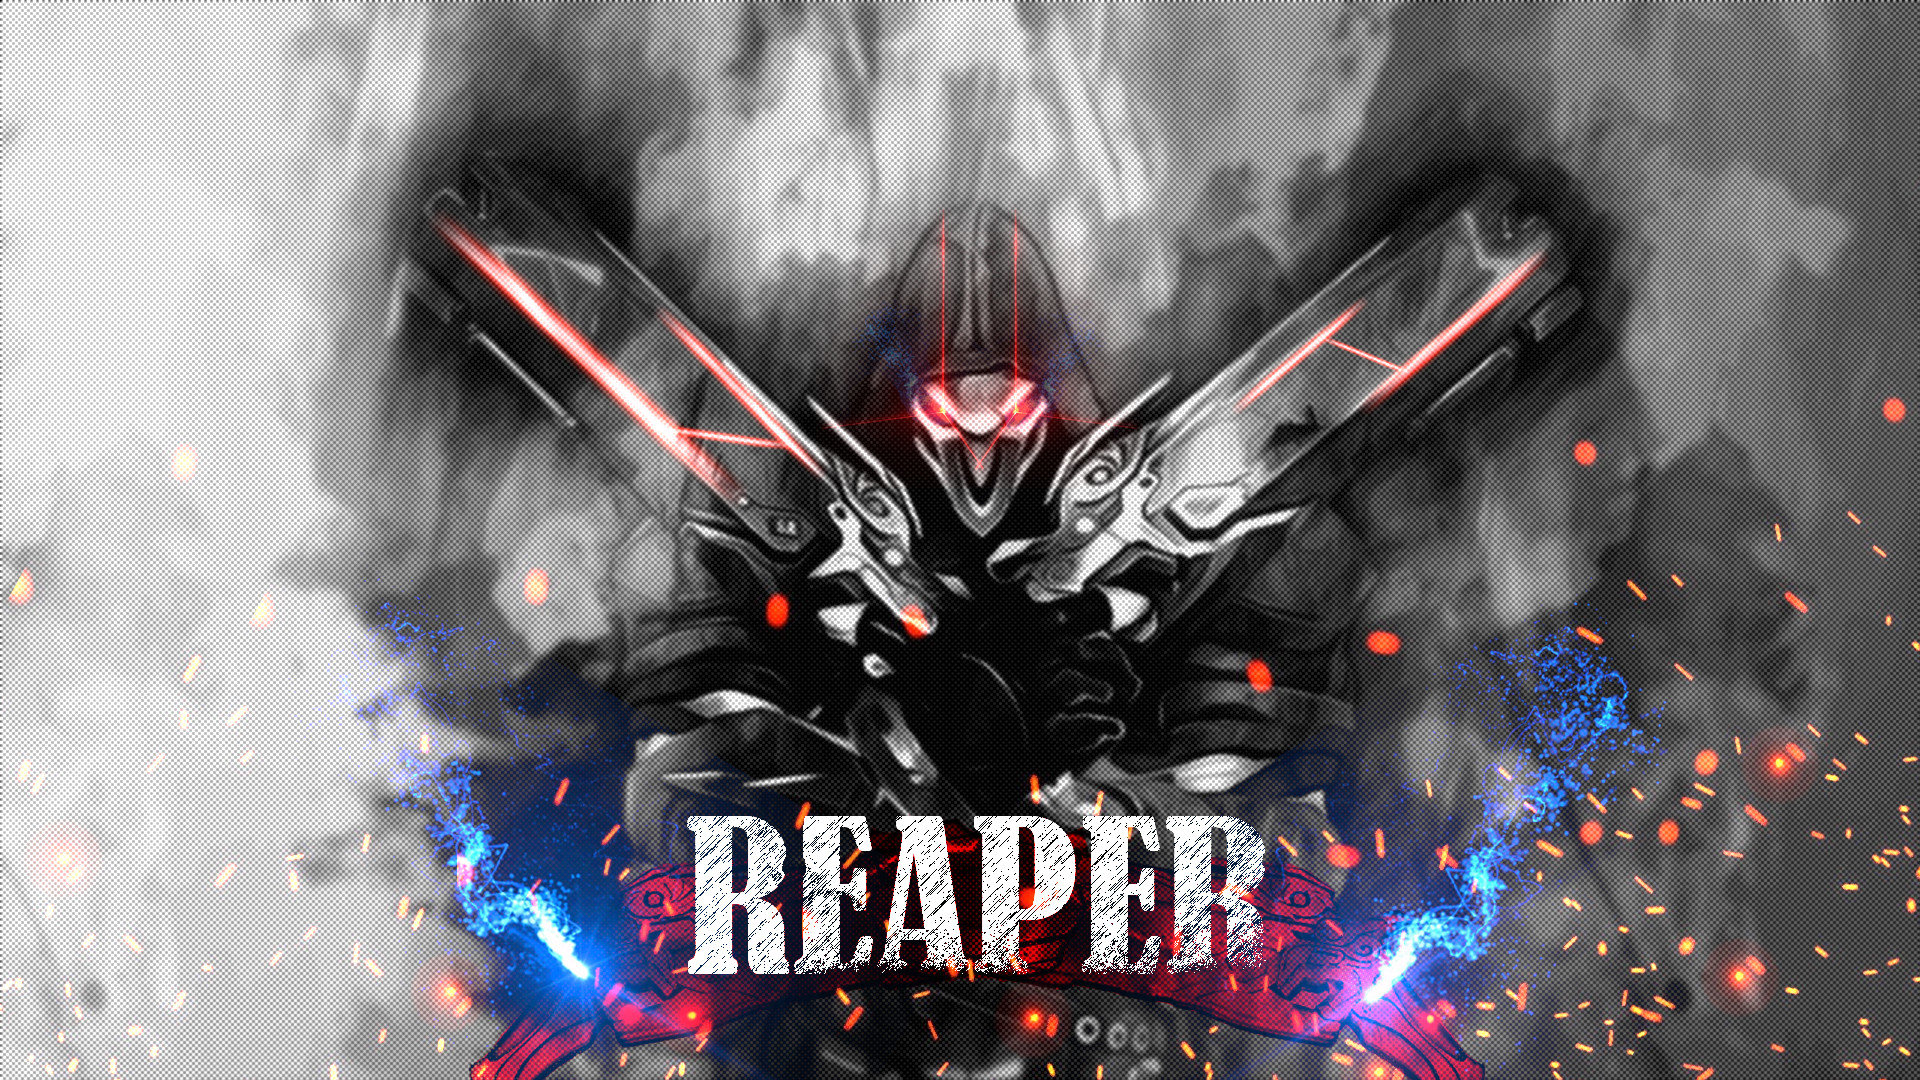 Best Reaper Wallpaper Id - Overwatch Wallpaper 1920x1080 Reaper - HD Wallpaper 